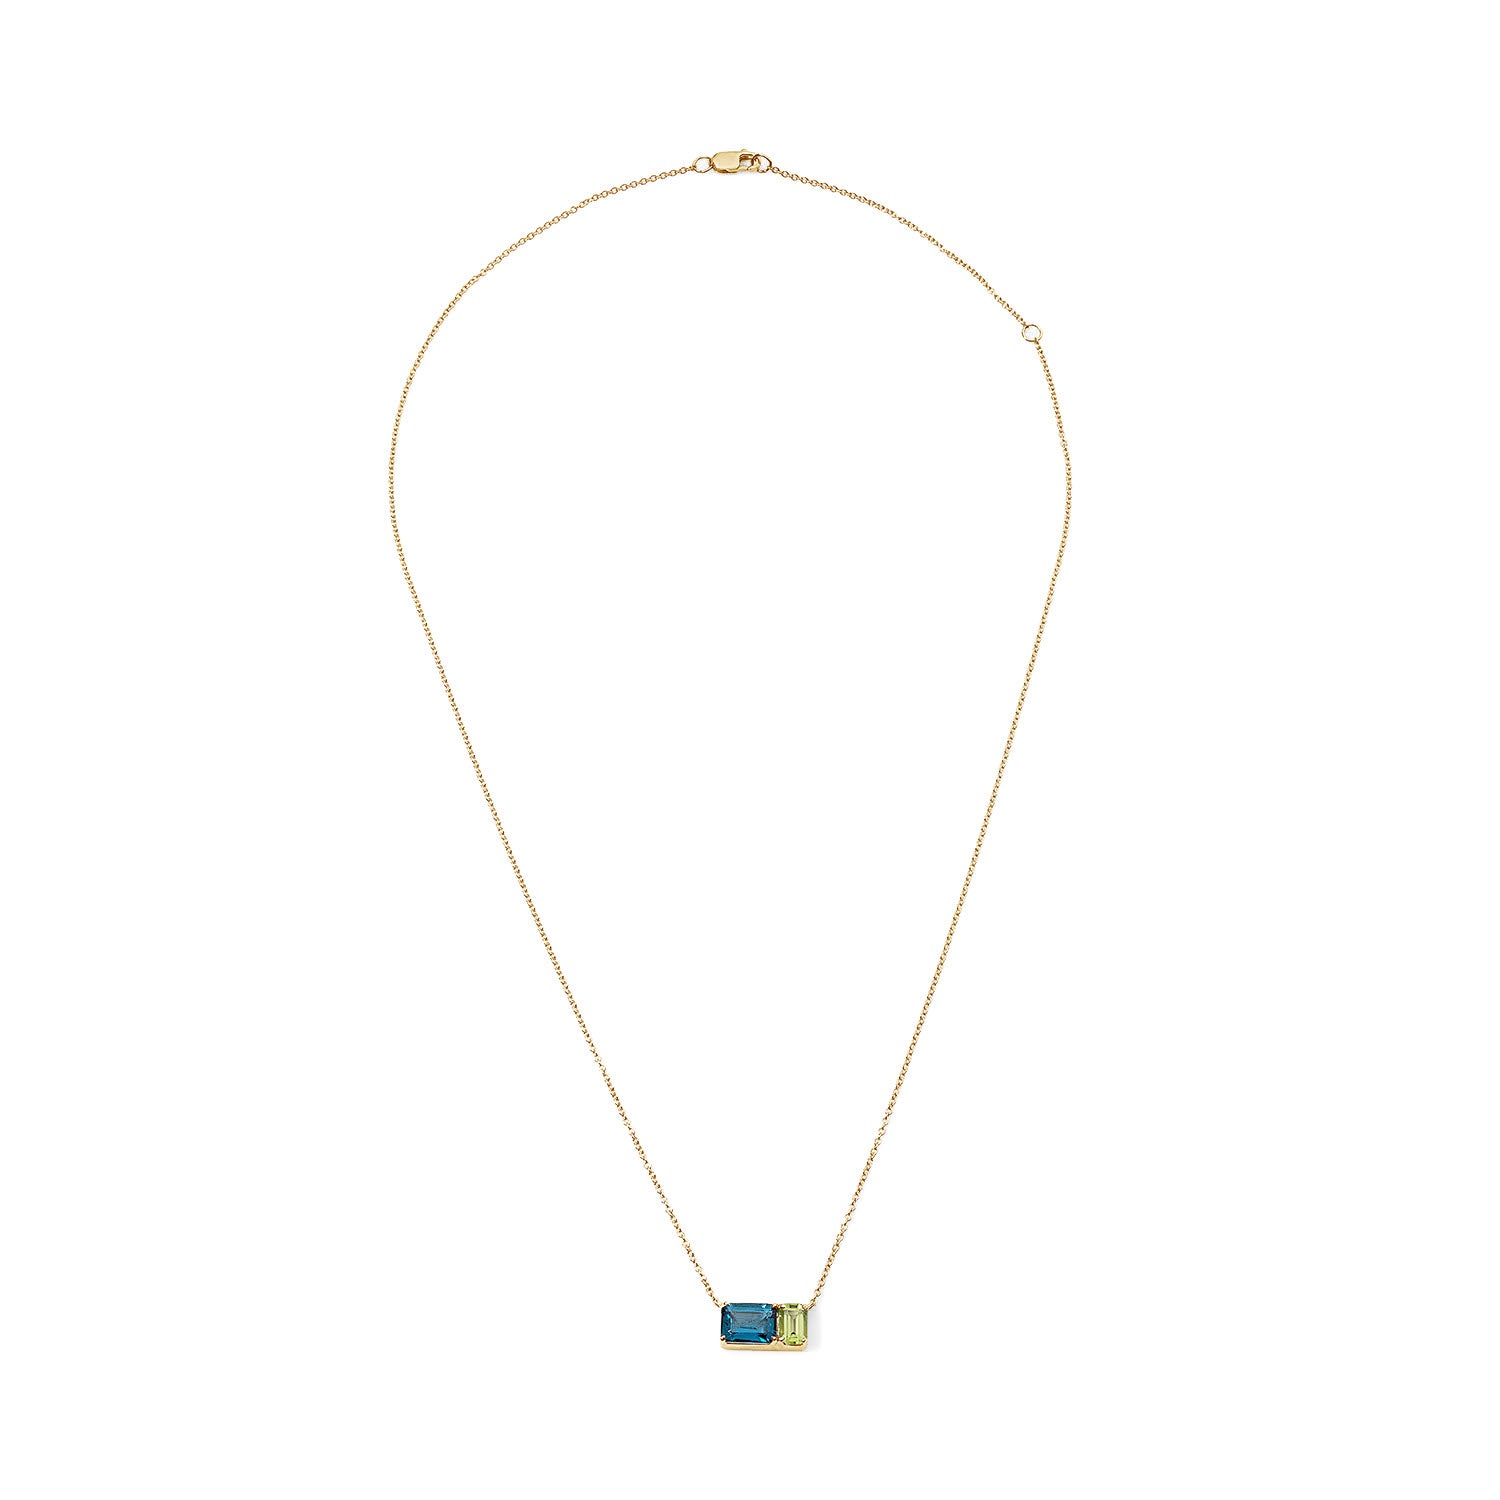 London Blue Topaz and Peridot Emerald Cut Necklace